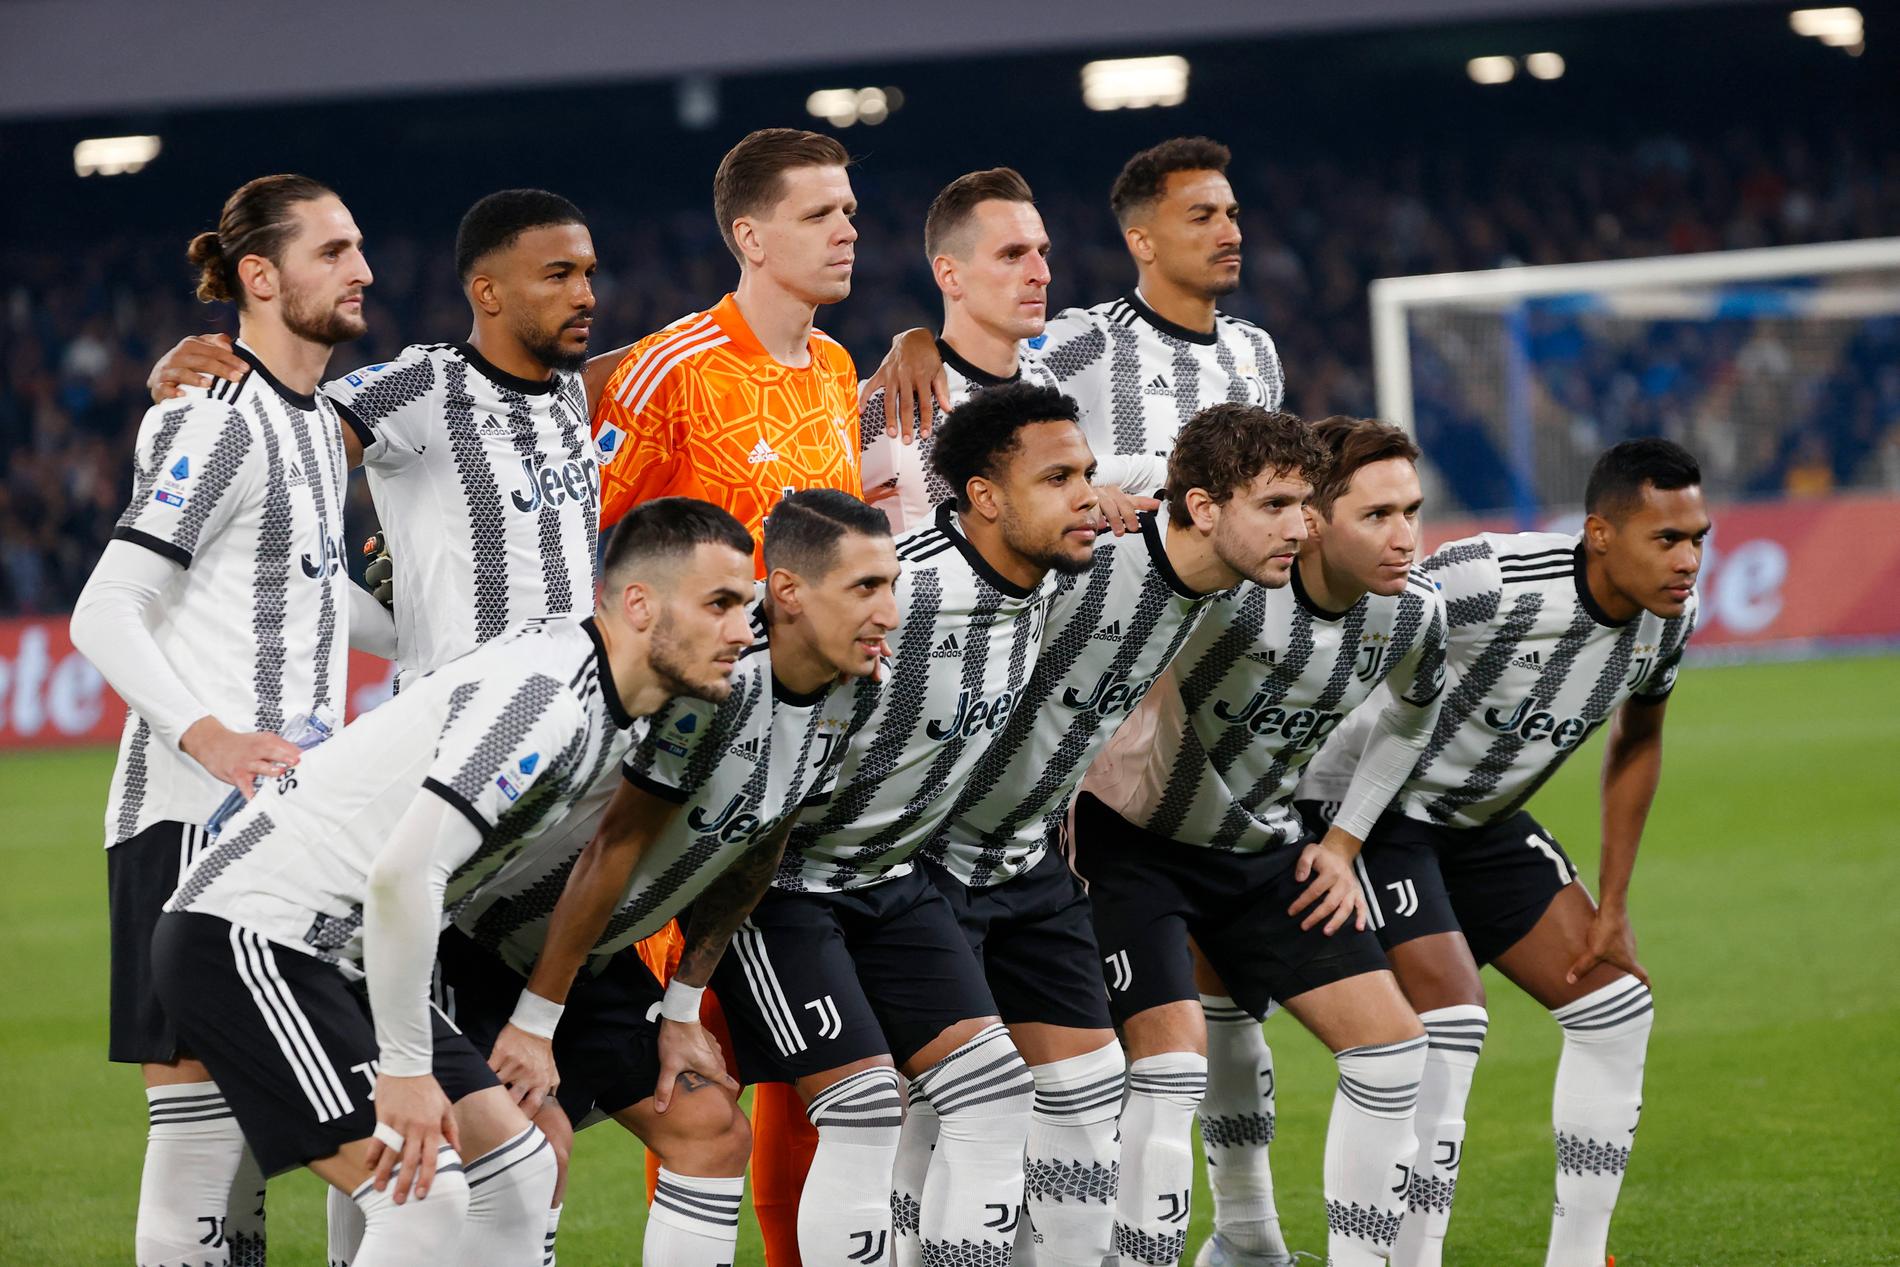 Perché la Juventus è penalizzata di punti?